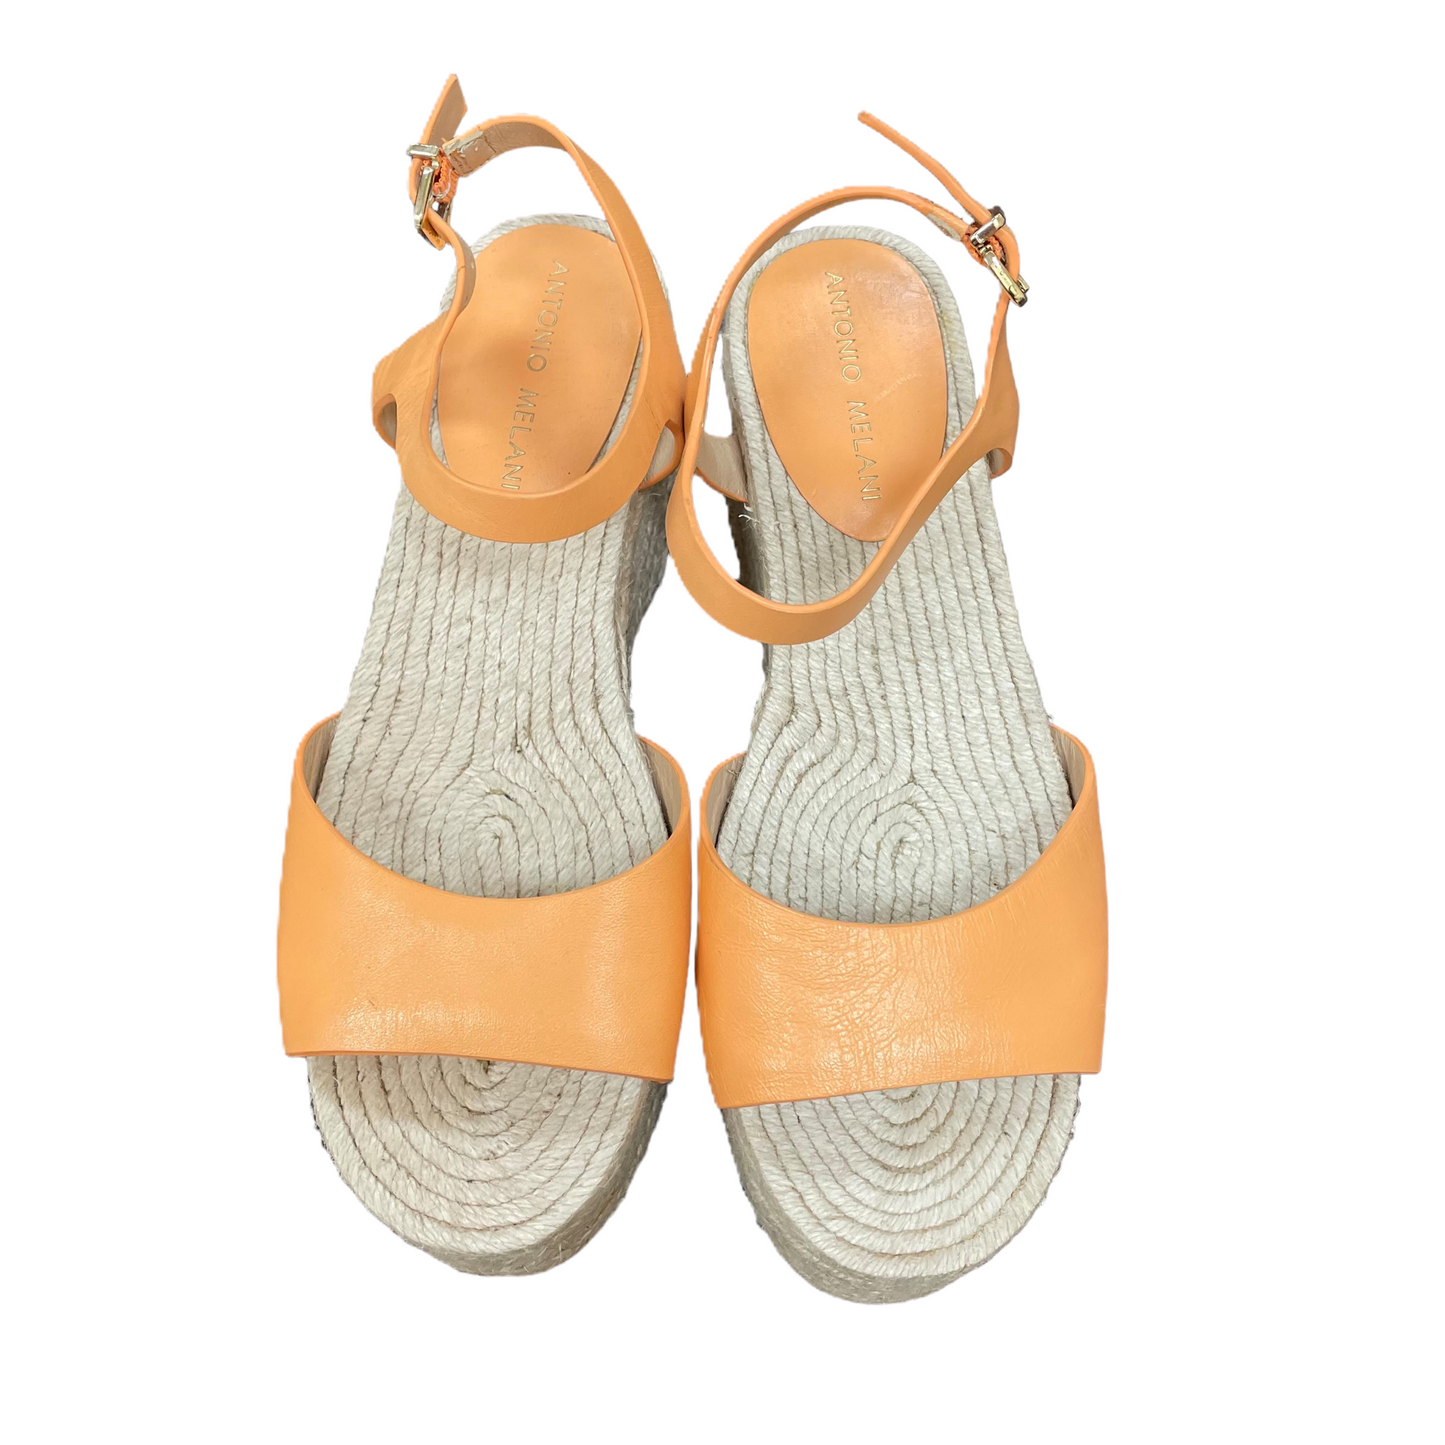 Peach Sandals Heels Wedge By Antonio Melani, Size: 7.5